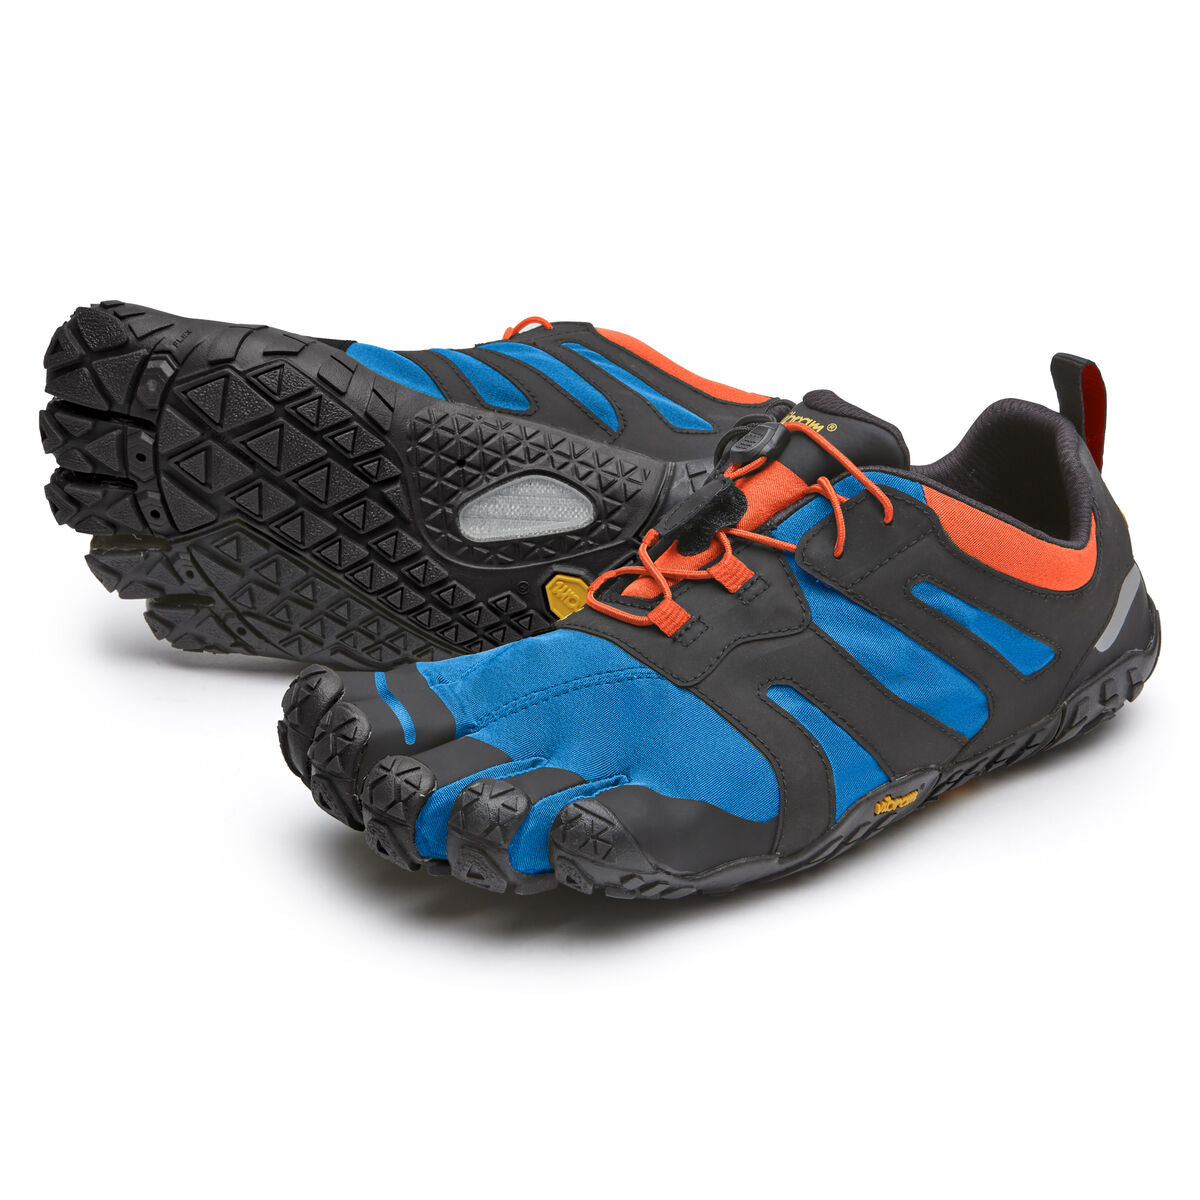 Men's Vibram Five Fingers V-Trail 2.0 Running Shoe in Blue/Orange from the front